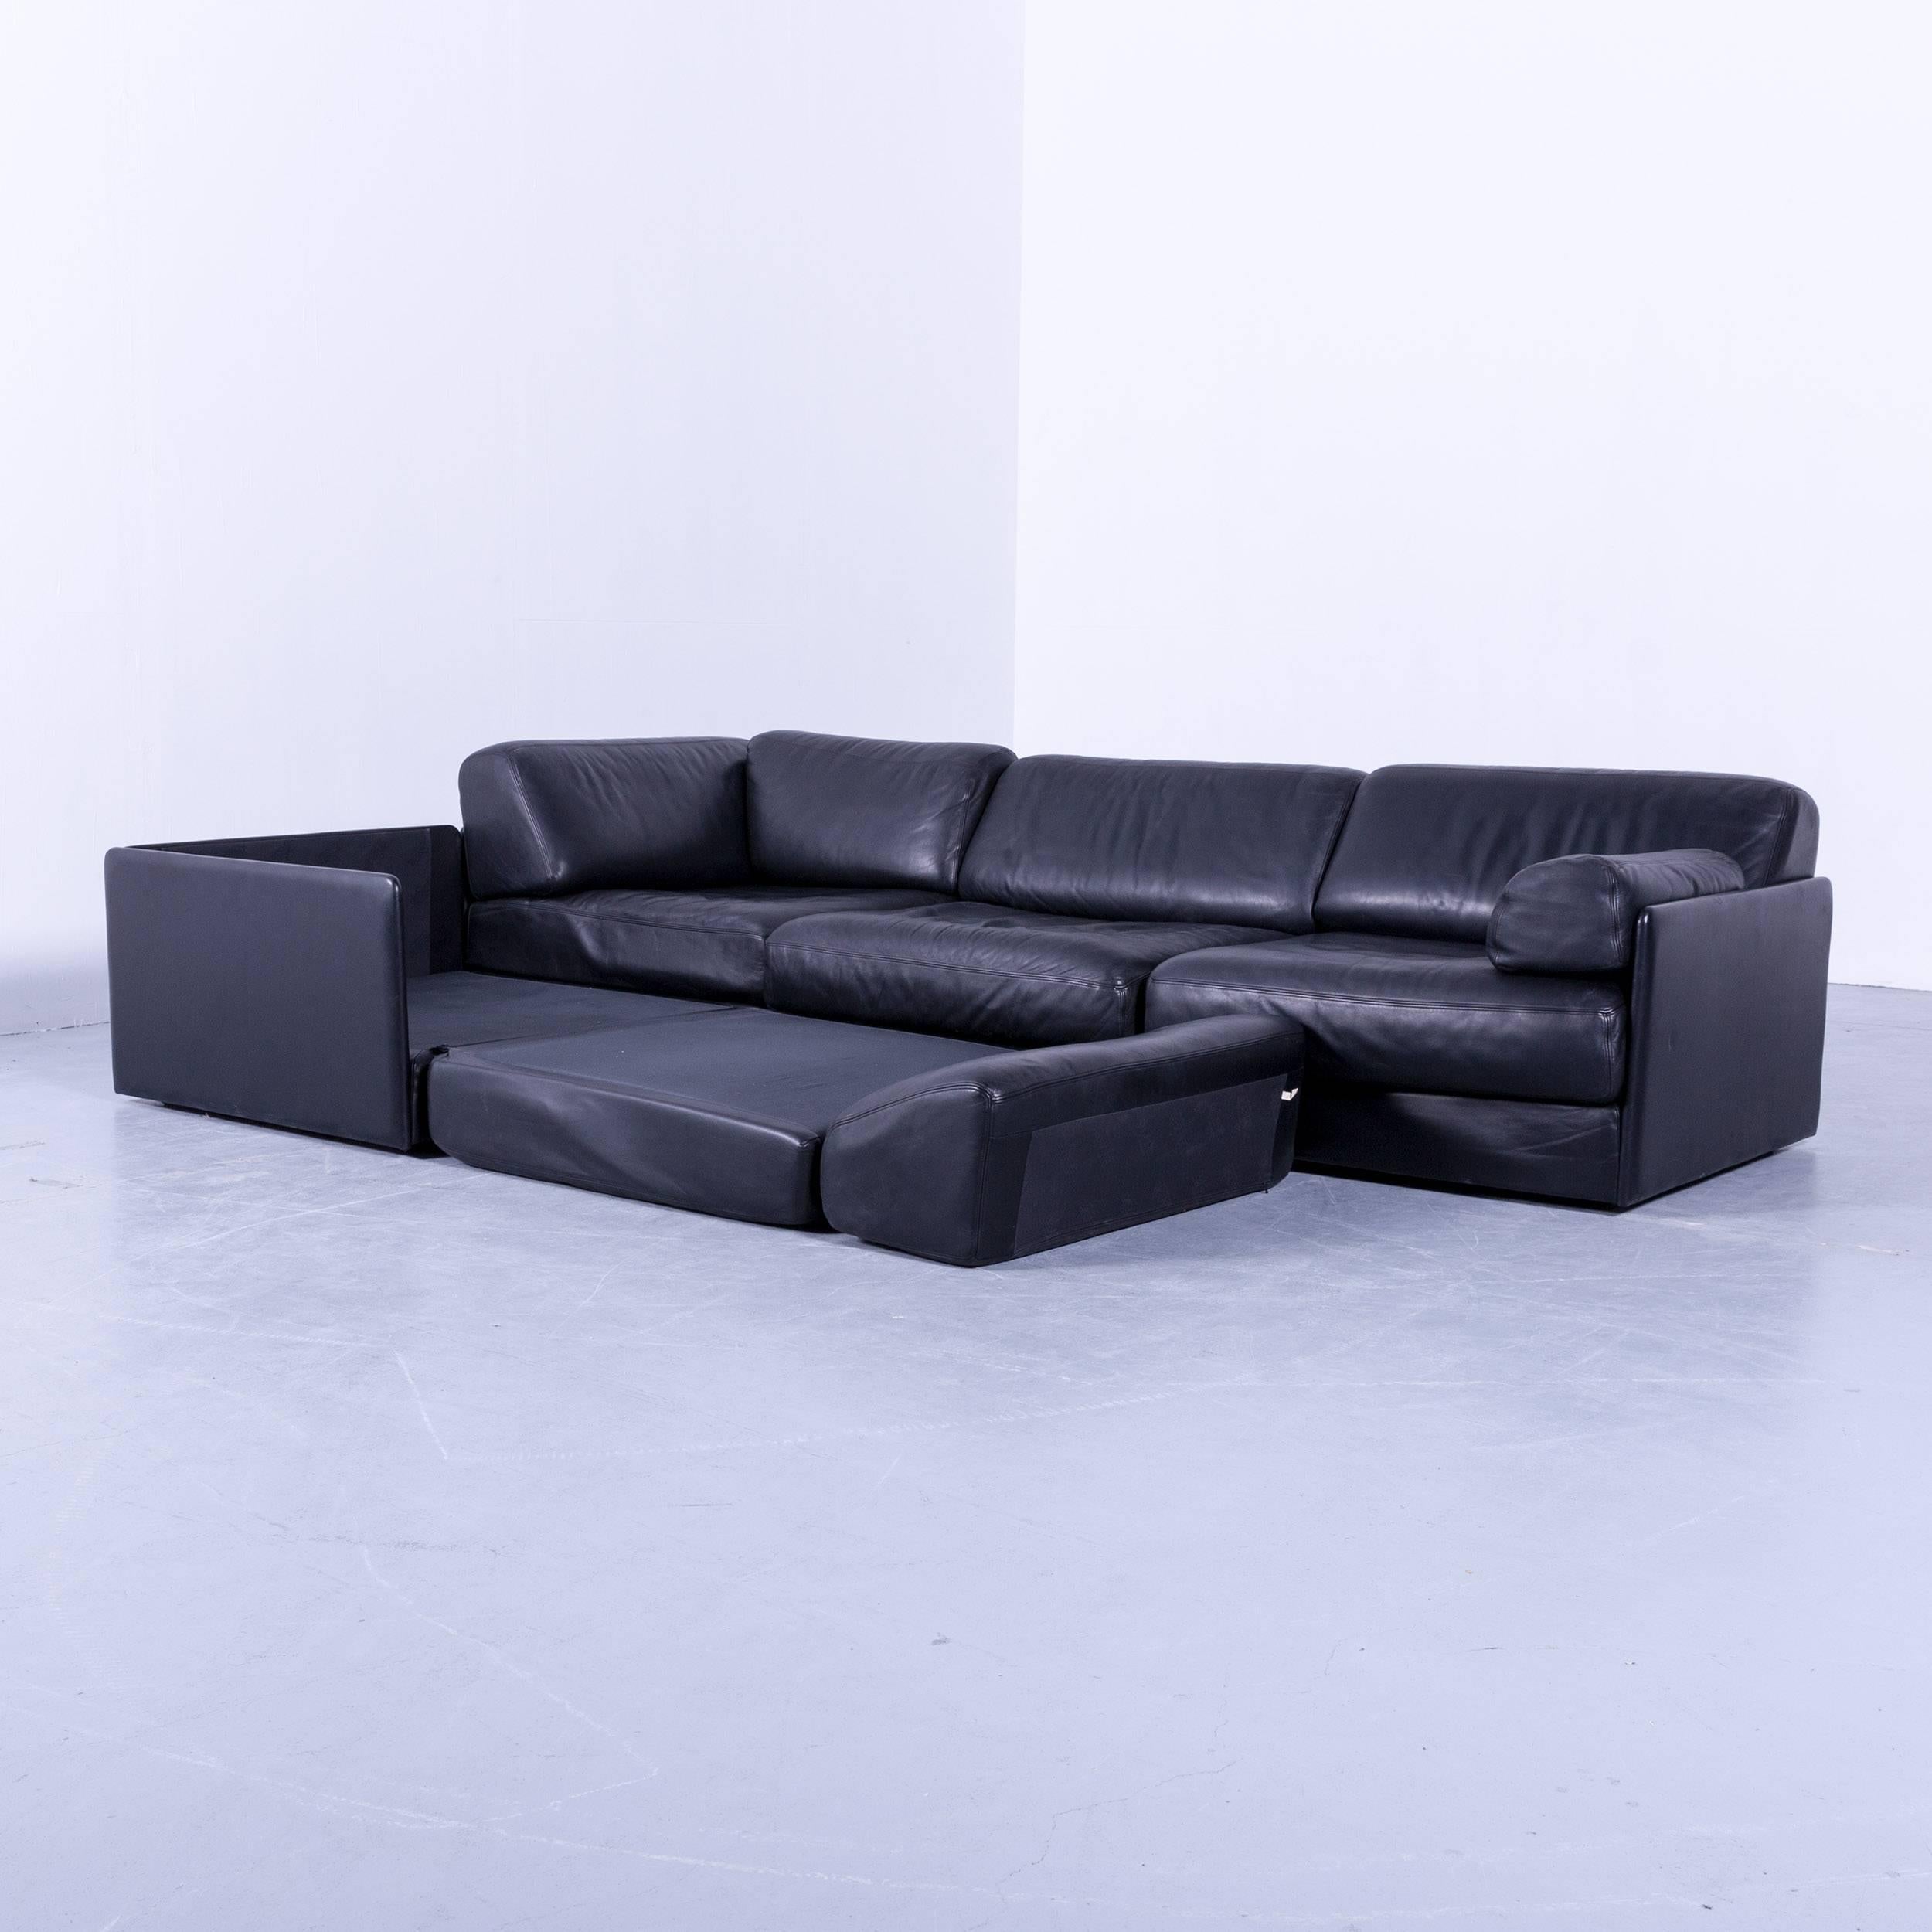 Contemporary De Sede DS 76 Designer Corner Sofa Black Leather Sleeping Function Bed